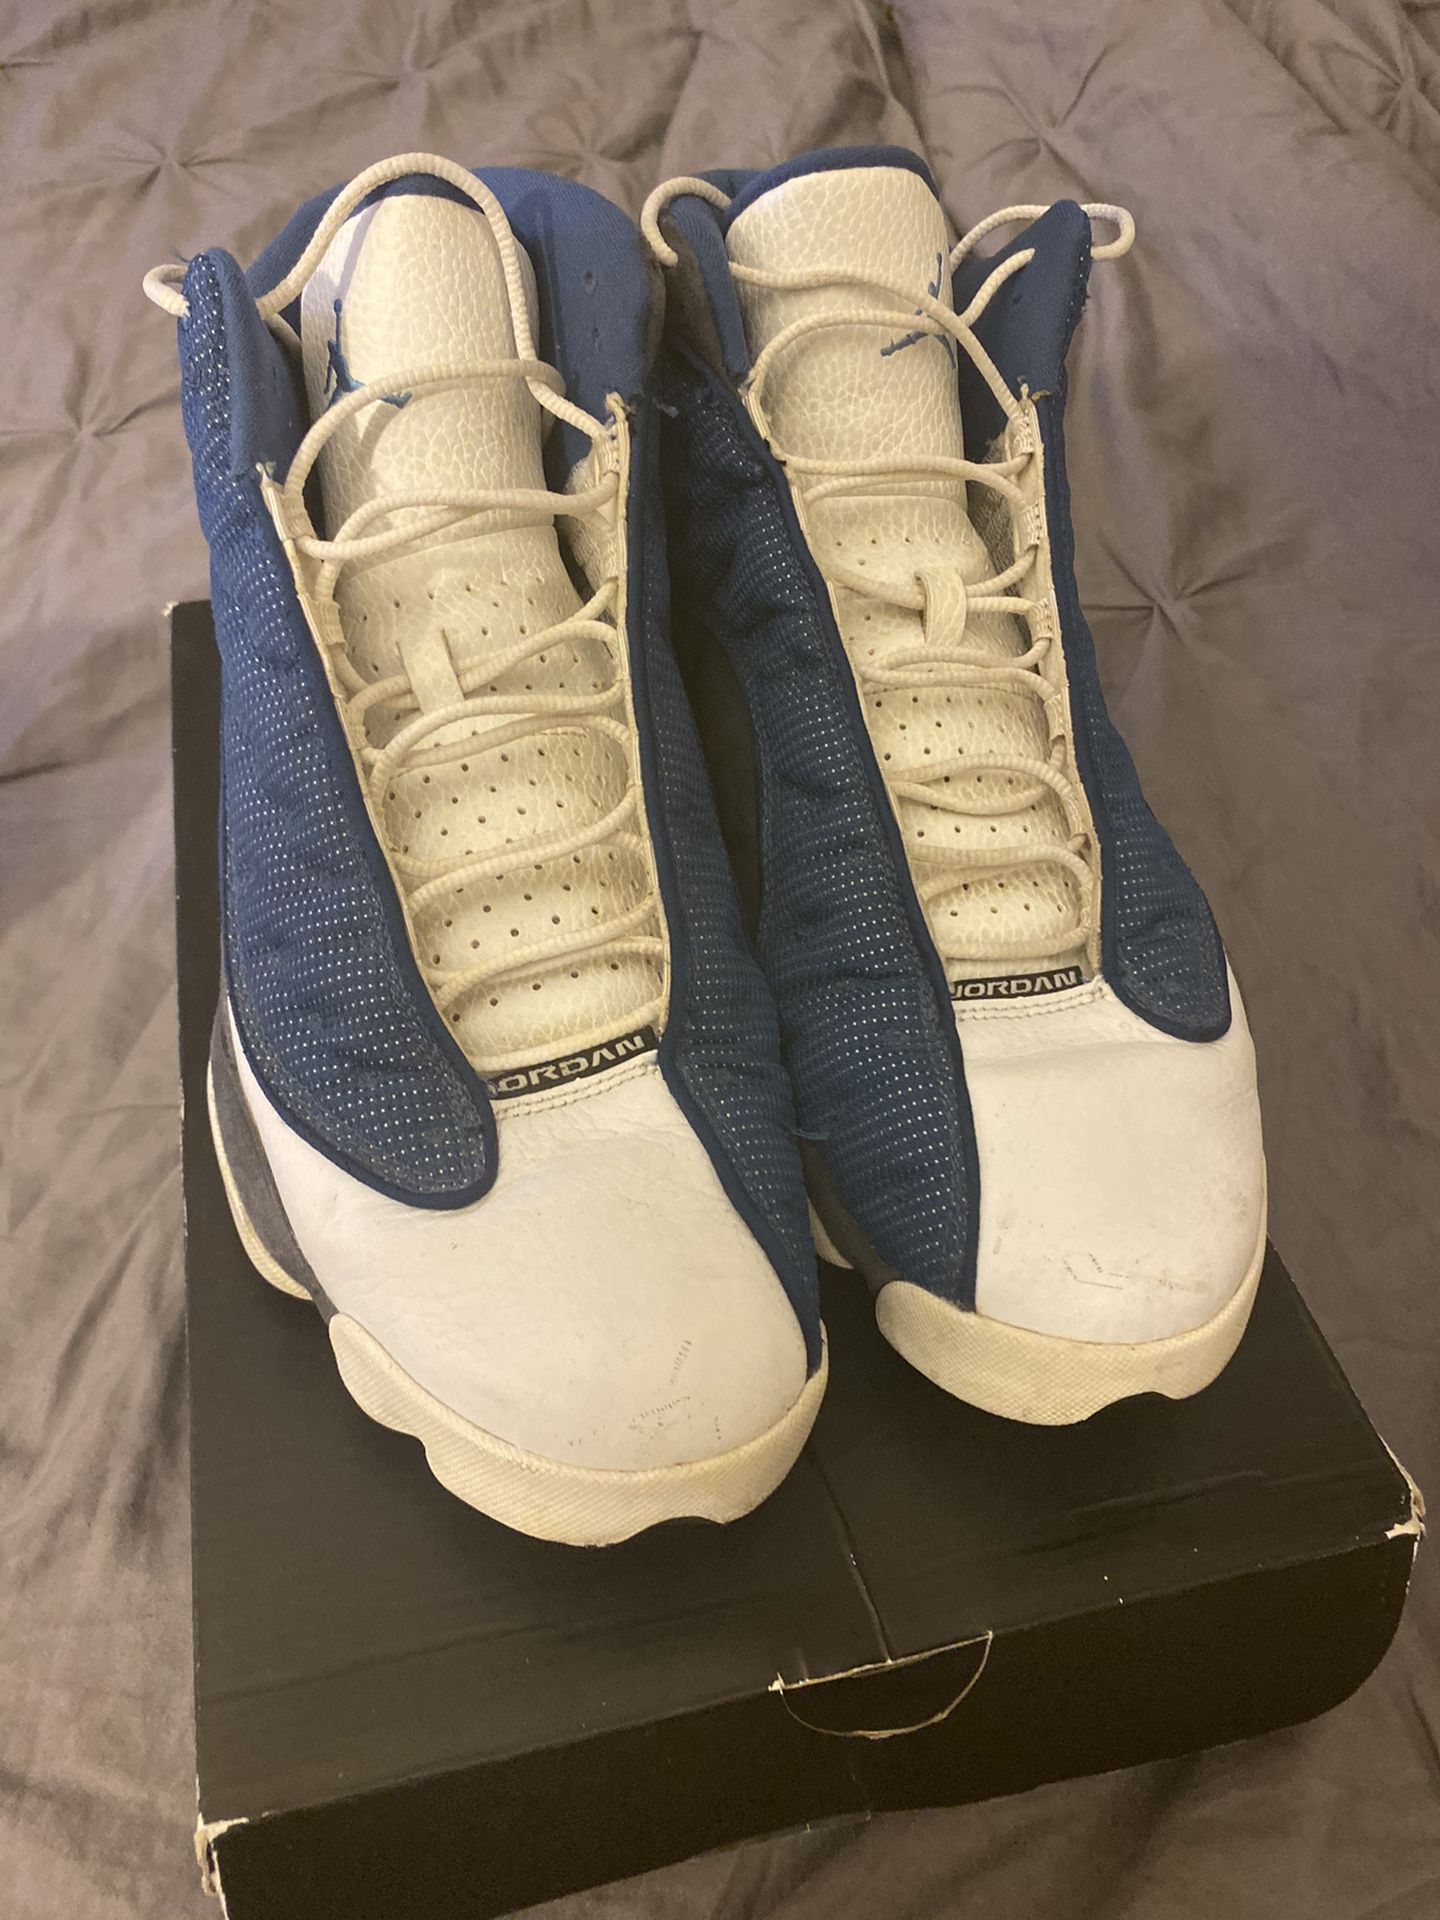 Men’s Nike Air Jordan XIII 13 Flint Grey Size 12 100% Authentic